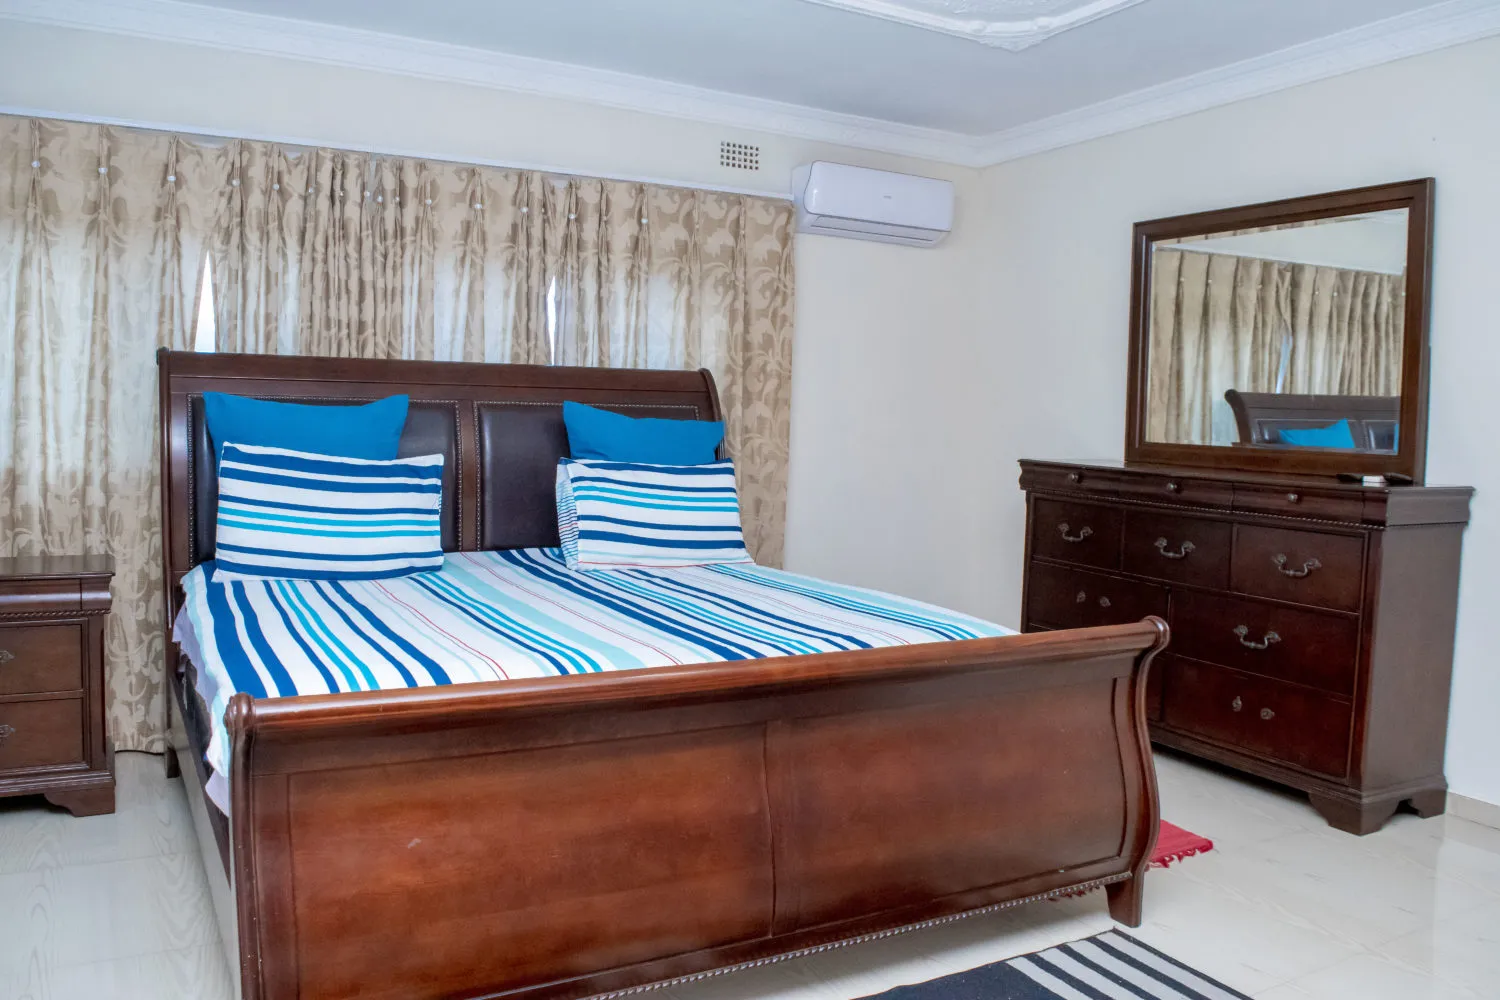 2 bedroom apartment in Lusaka